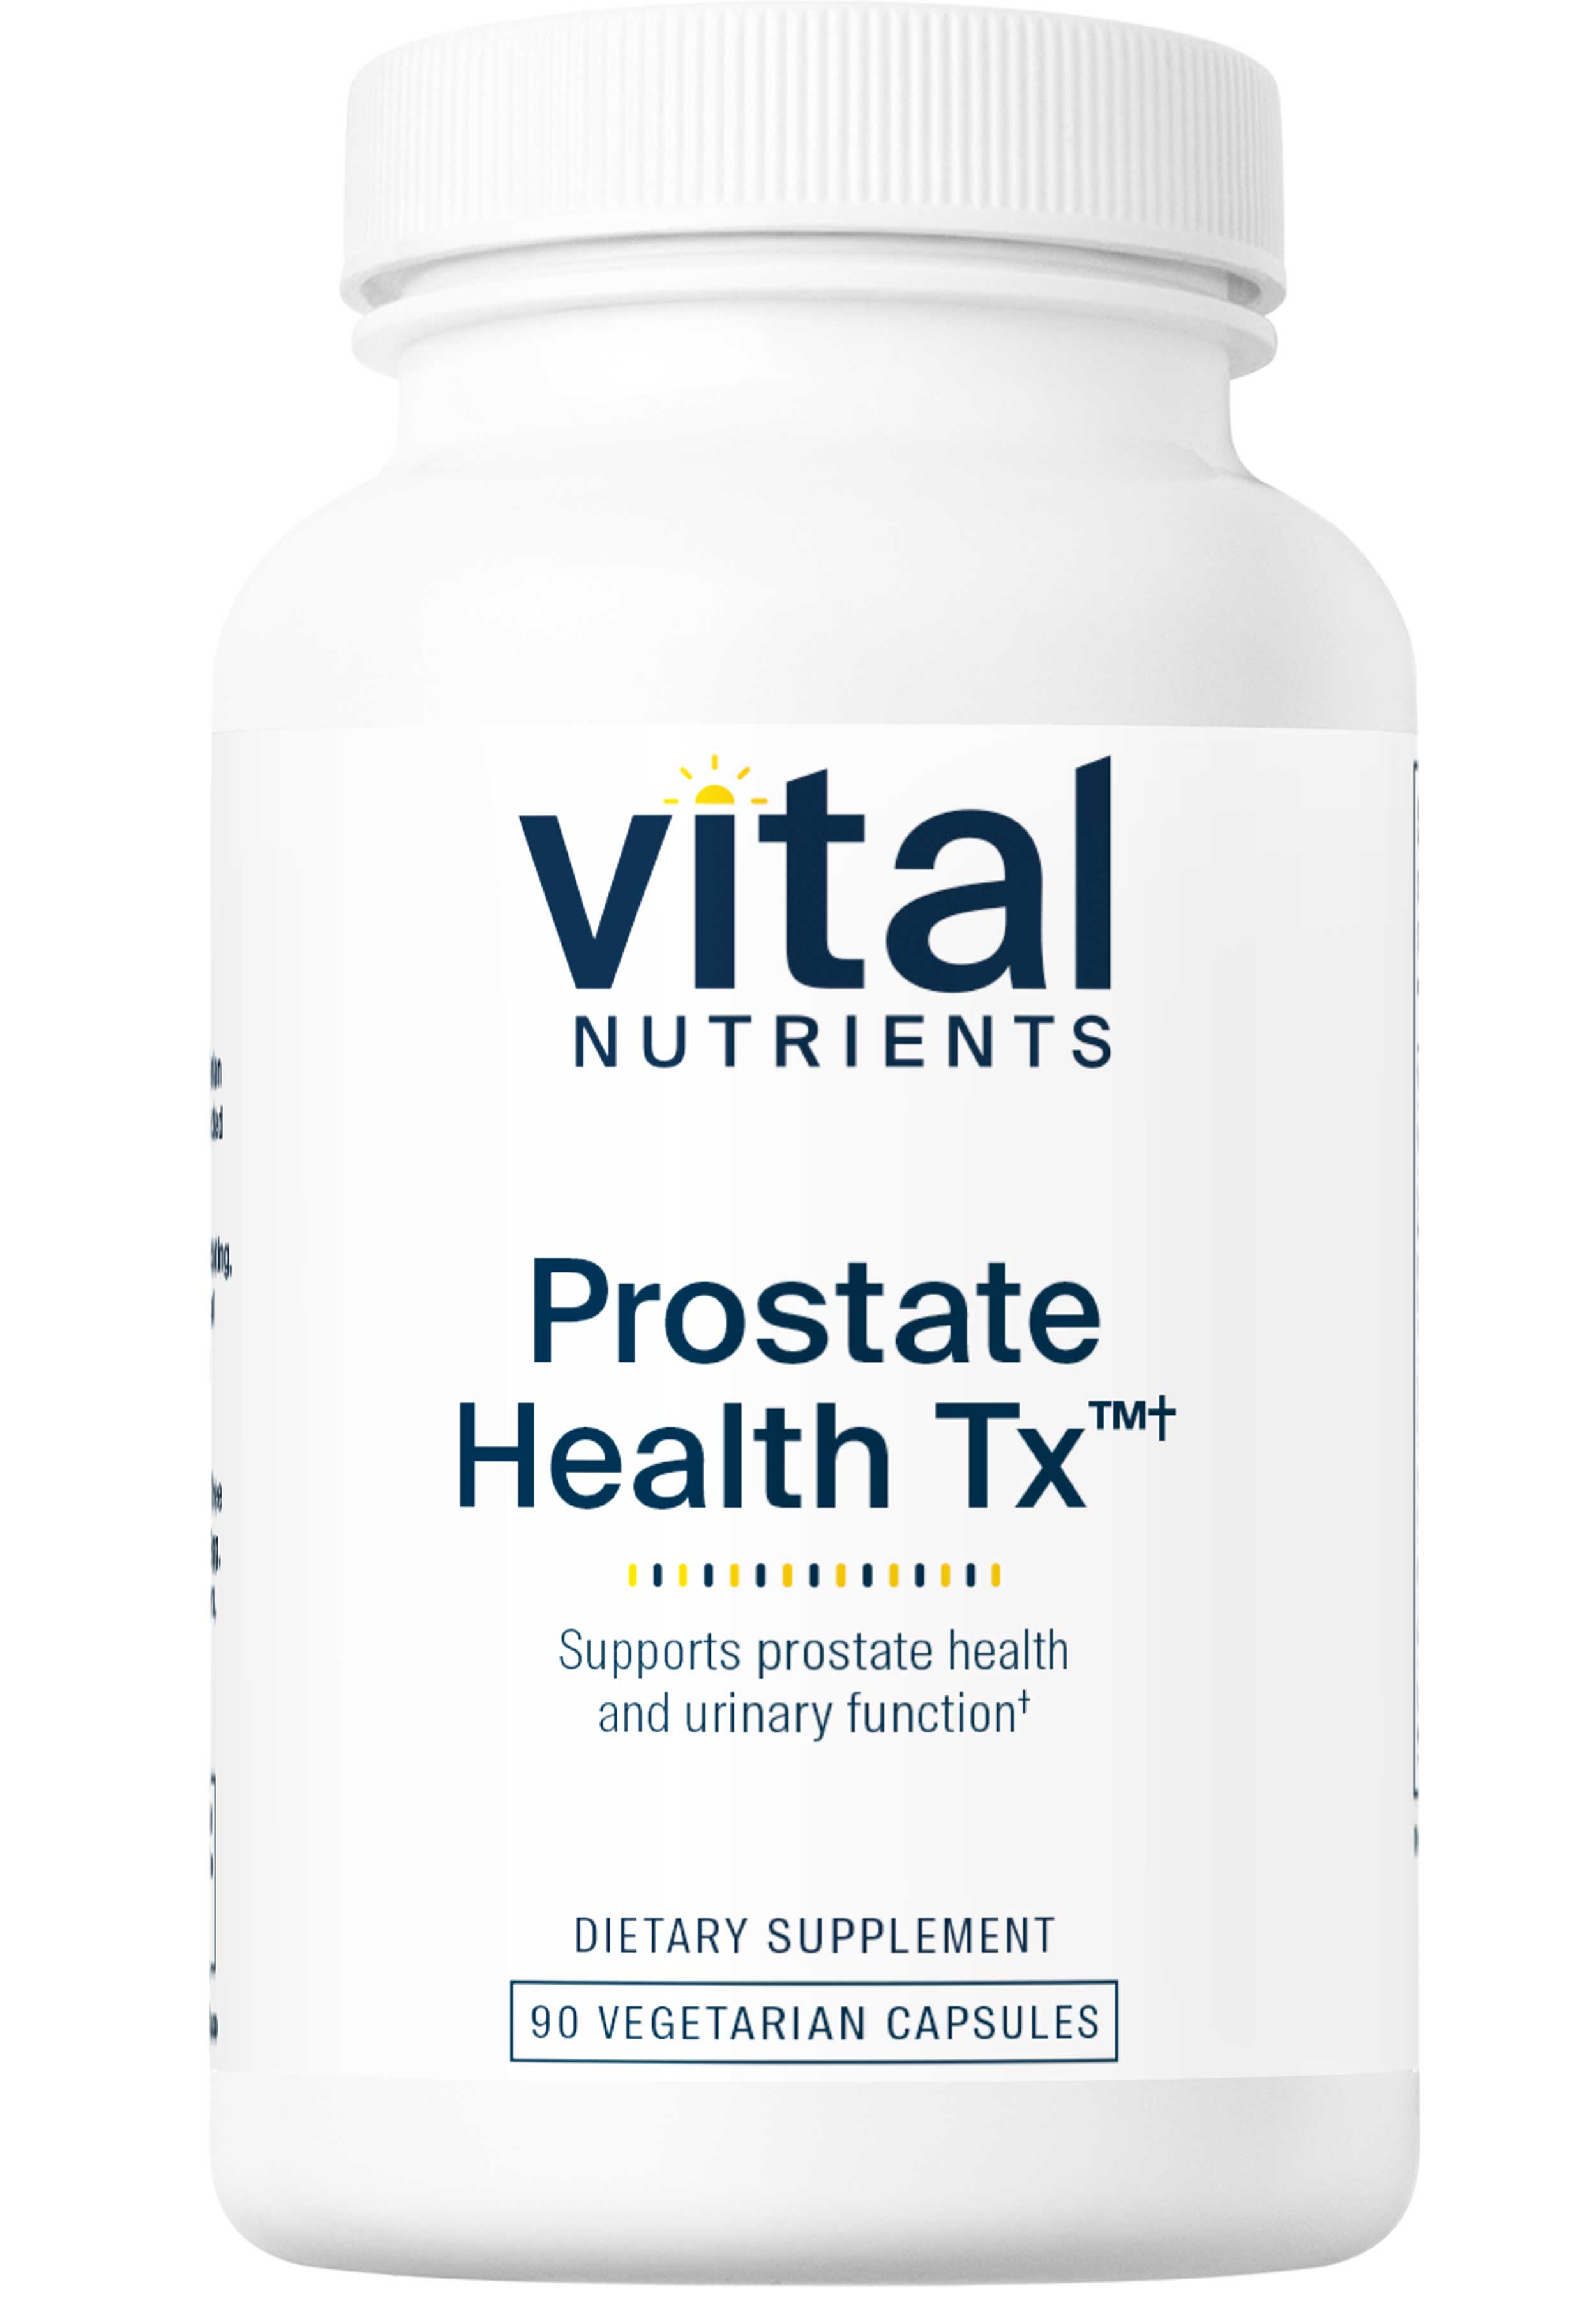 Vital Nutrients Prostate Health Tx